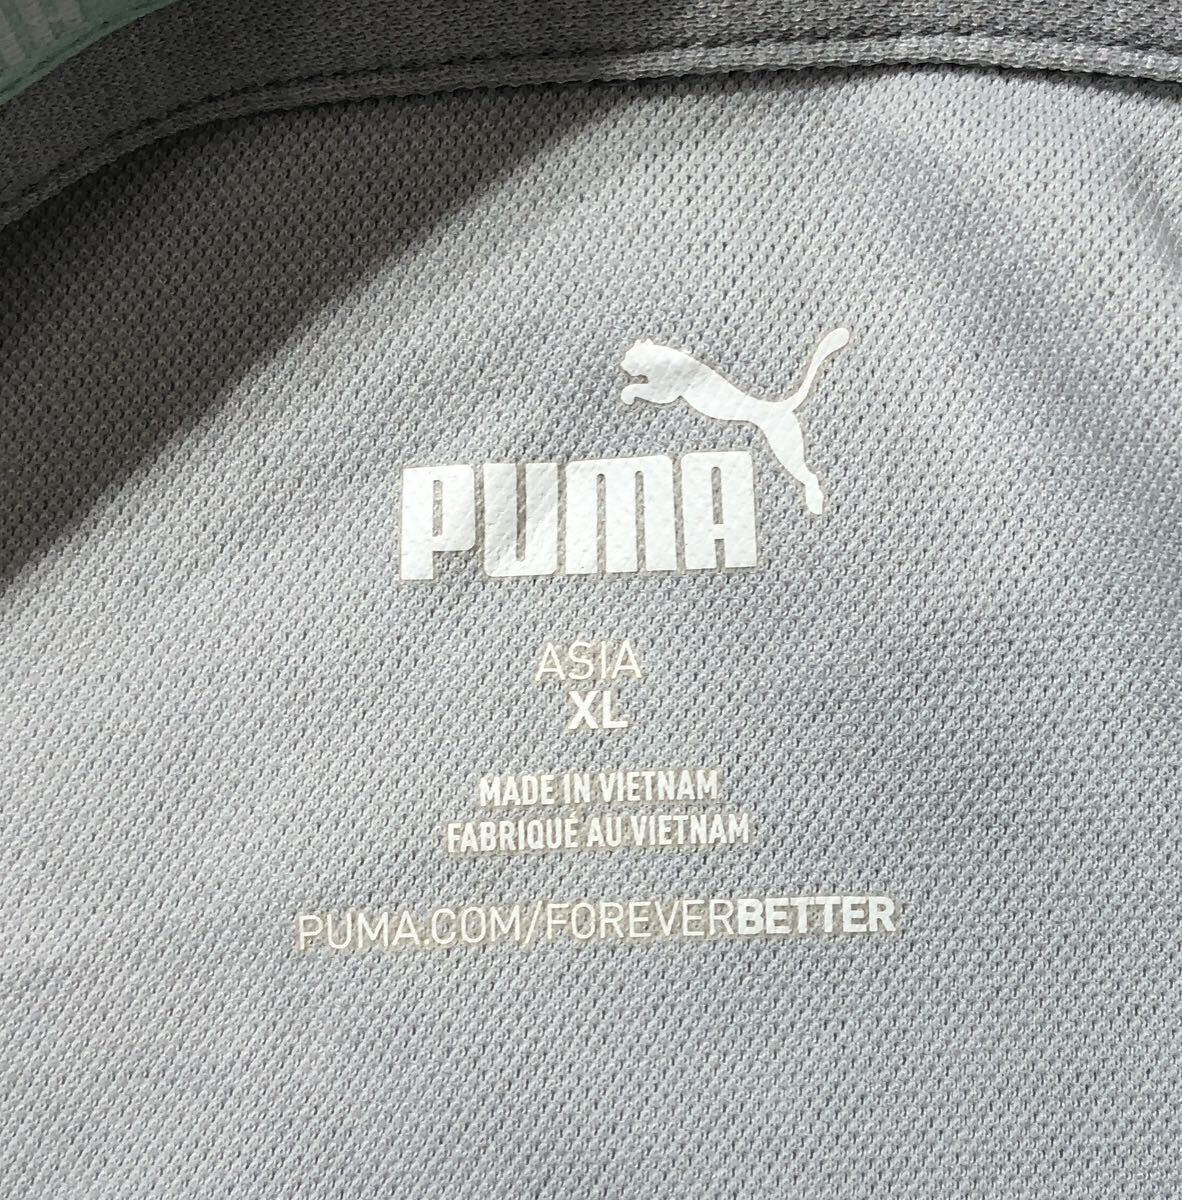  large size * PUMA GOLF Puma Golf * Logo embroidery neitib pattern short sleeves Golf polo-shirt light gray XL